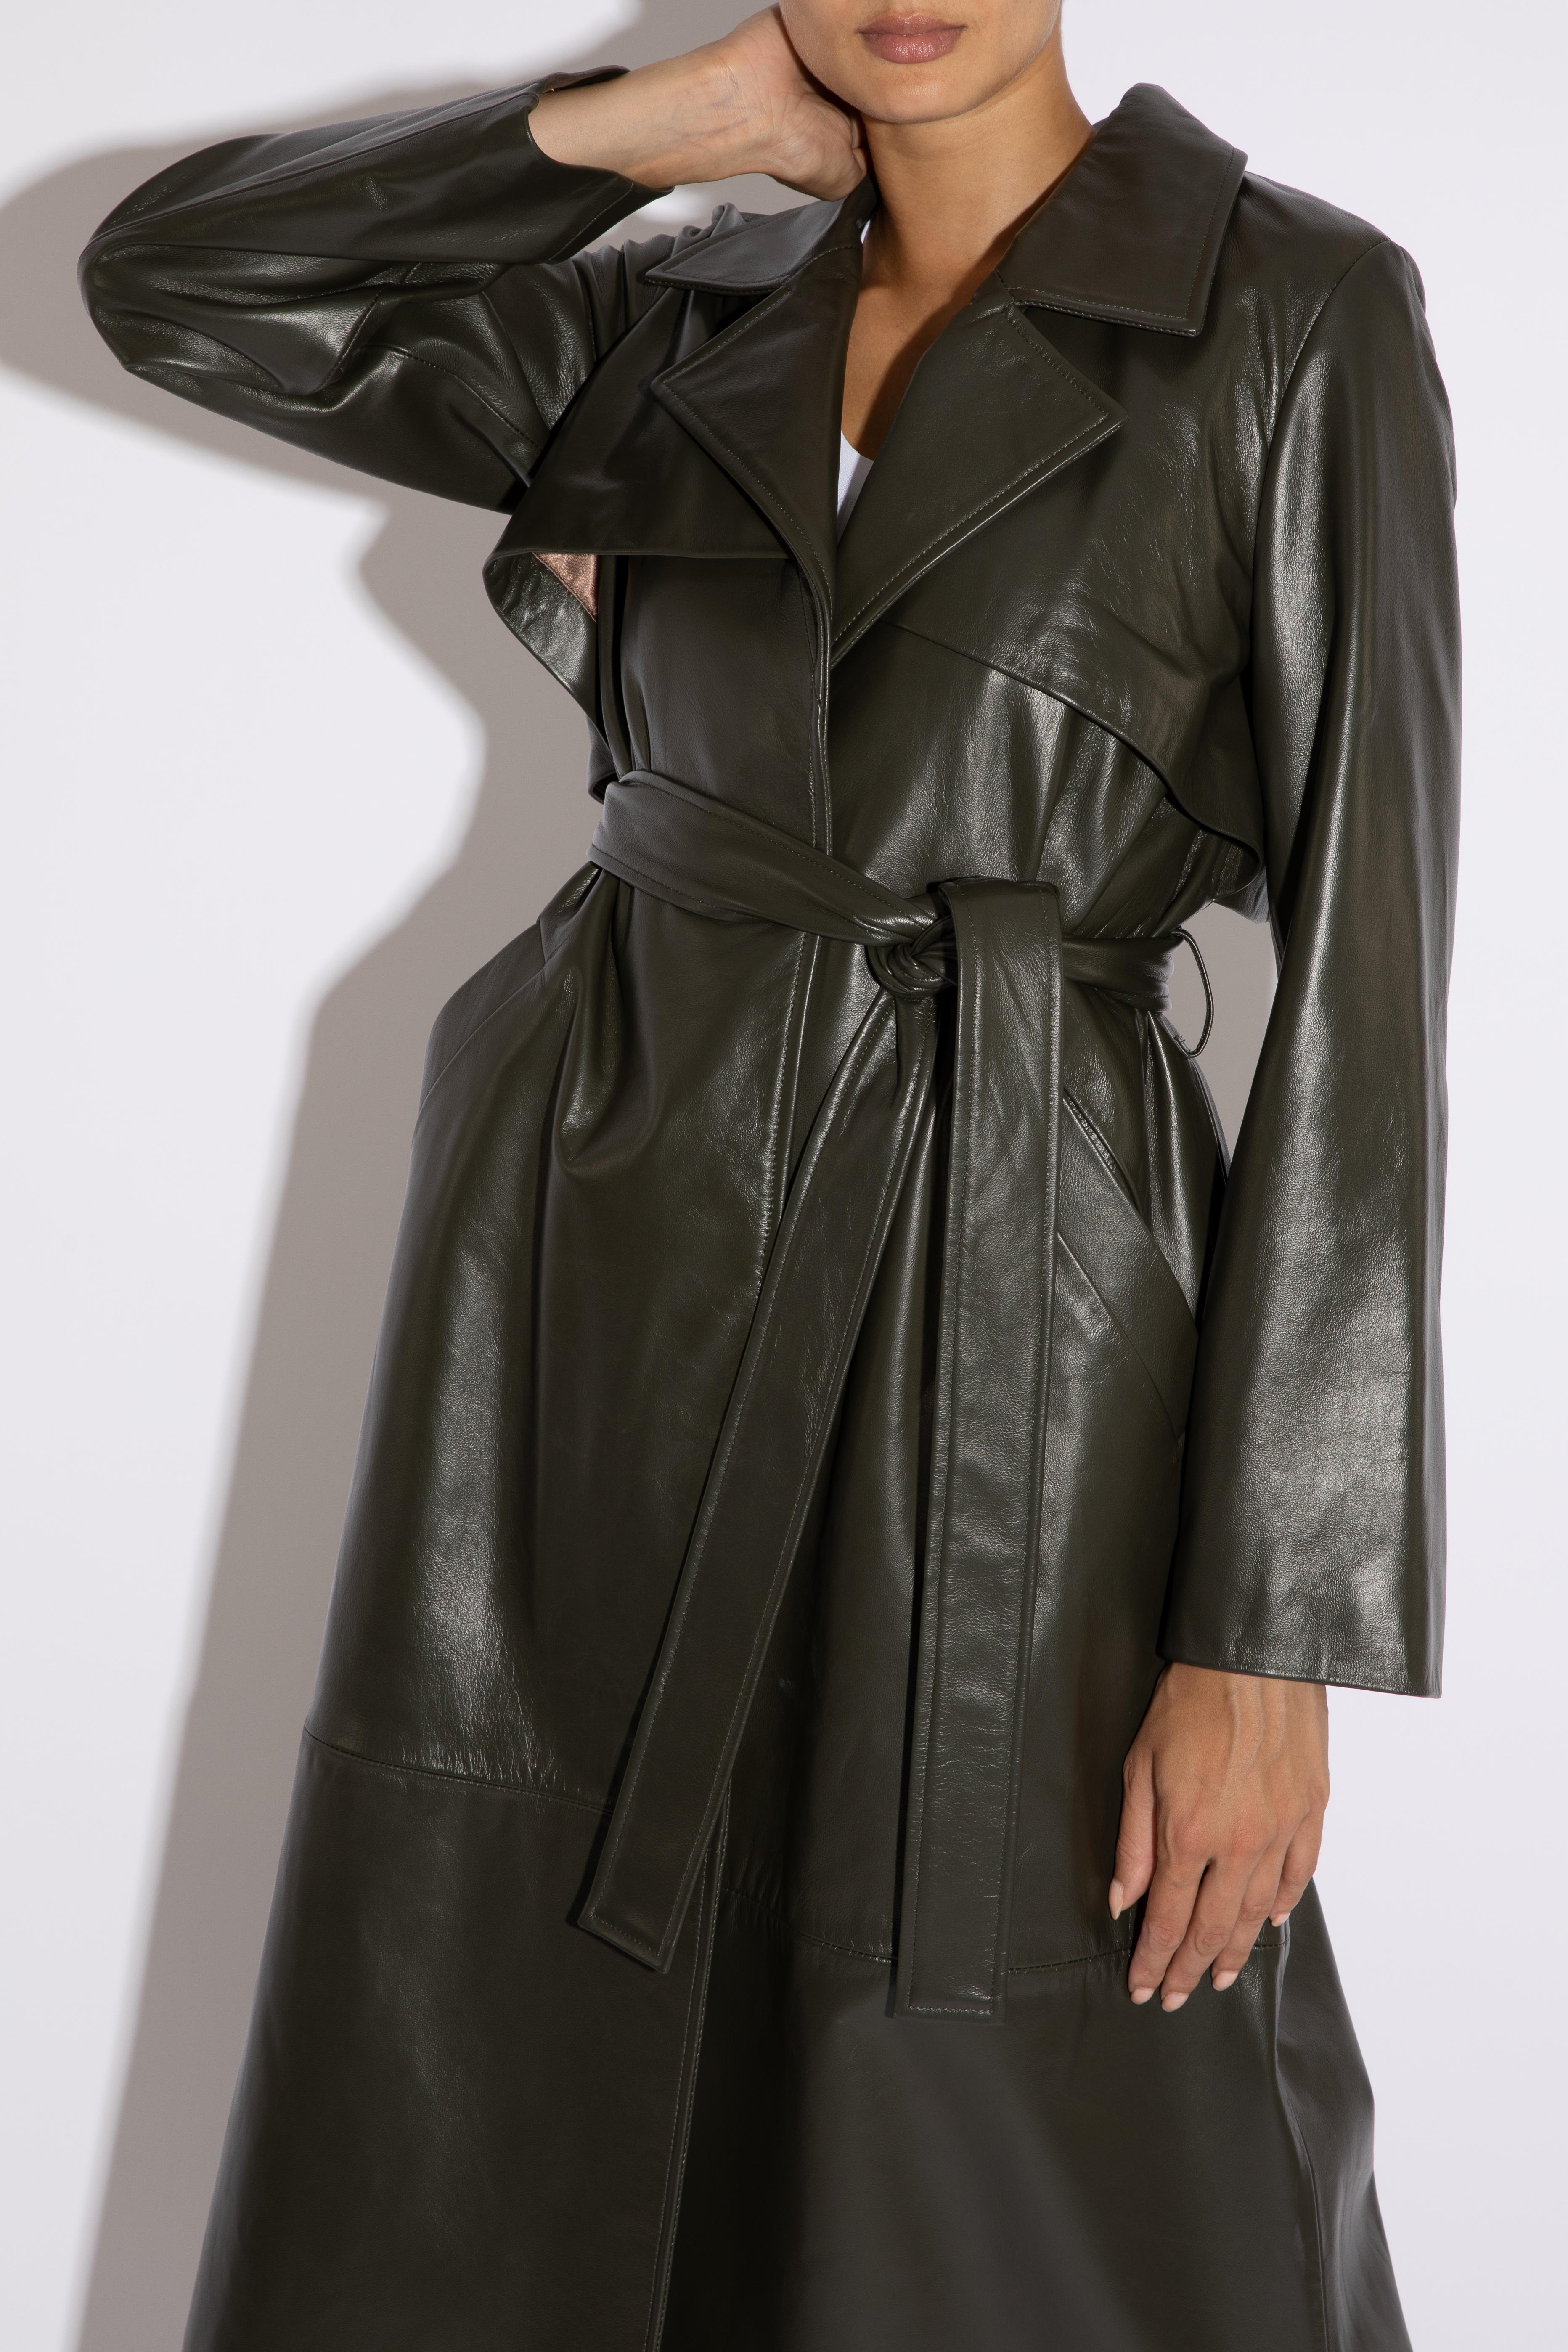 Verheyen London Leather Trench Coat in Dark Khaki Green - Size uk 12 For Sale 1